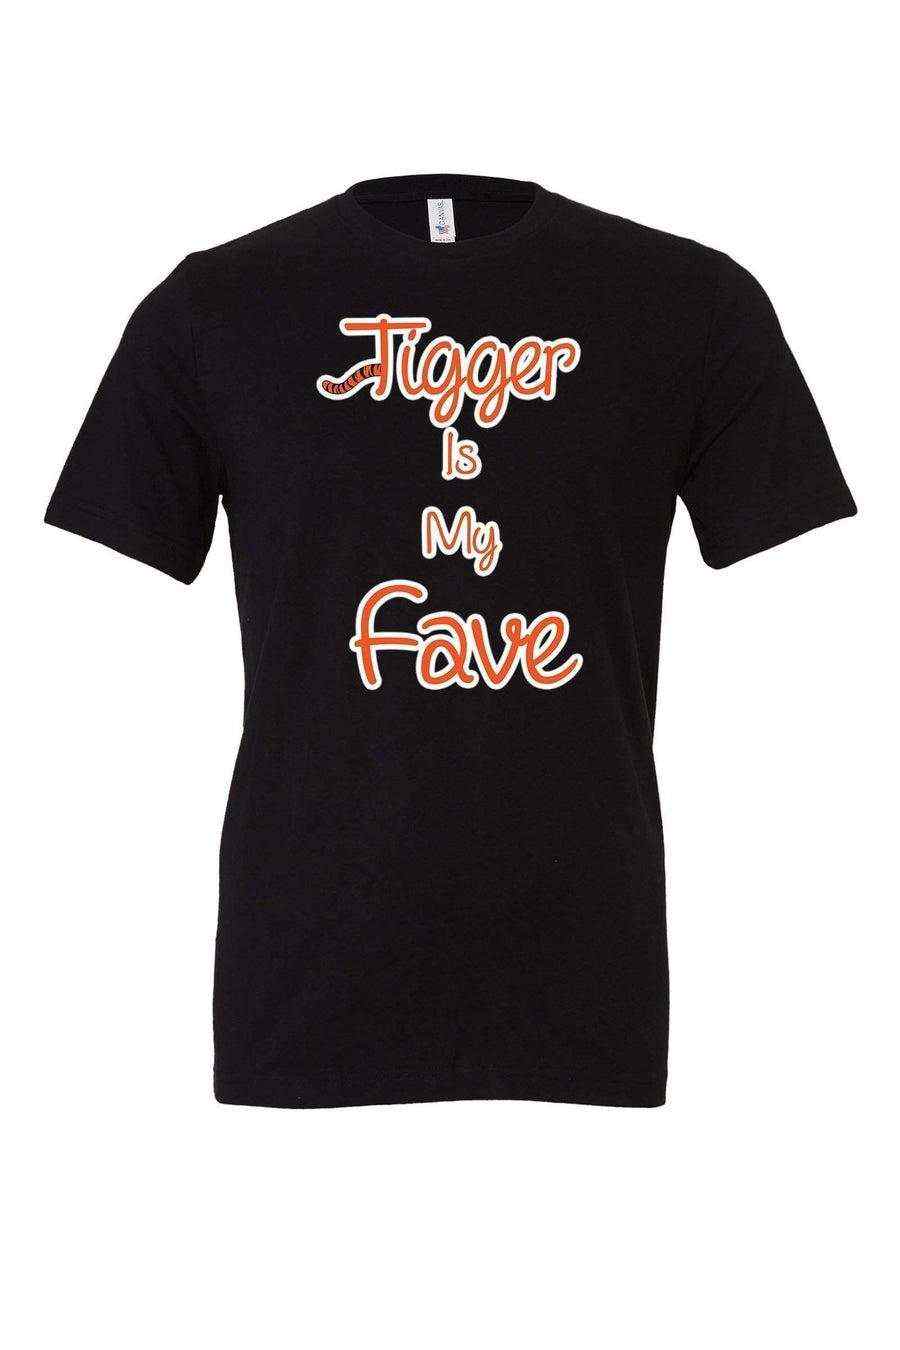 Tigger is my Fave Shirt - Dylan's Tees